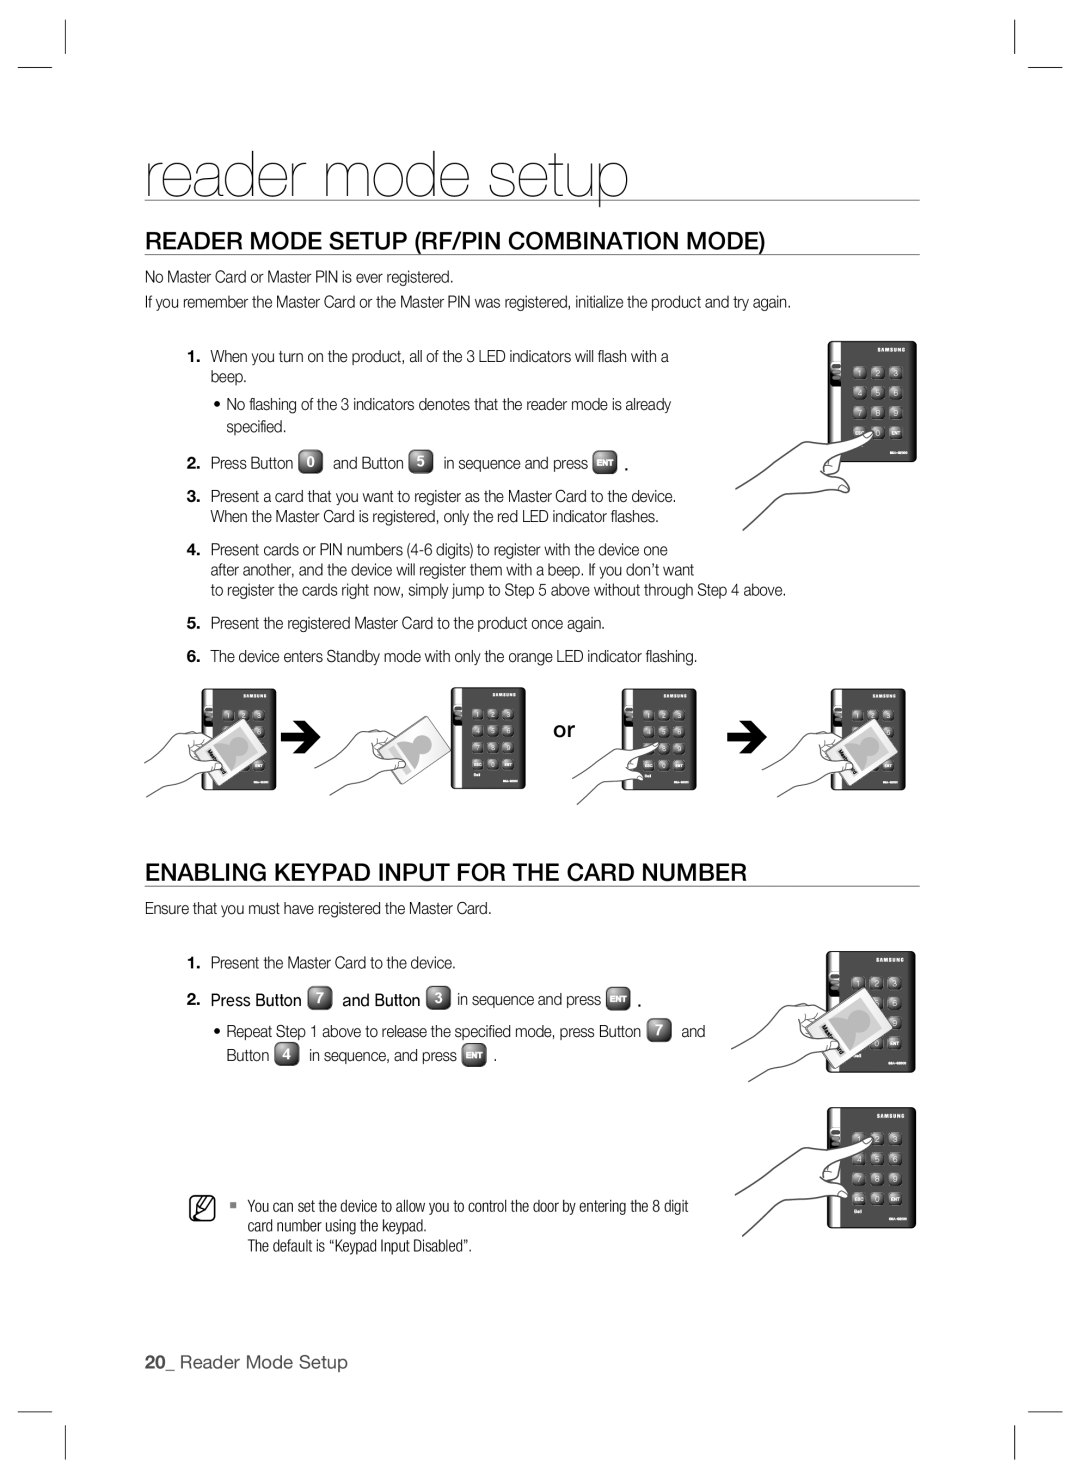 Samsung SSA-S2000W Reader Mode Setup Rf/Pin Combination Mode, Enabling Keypad Input For The Card Number, reader mode setup 